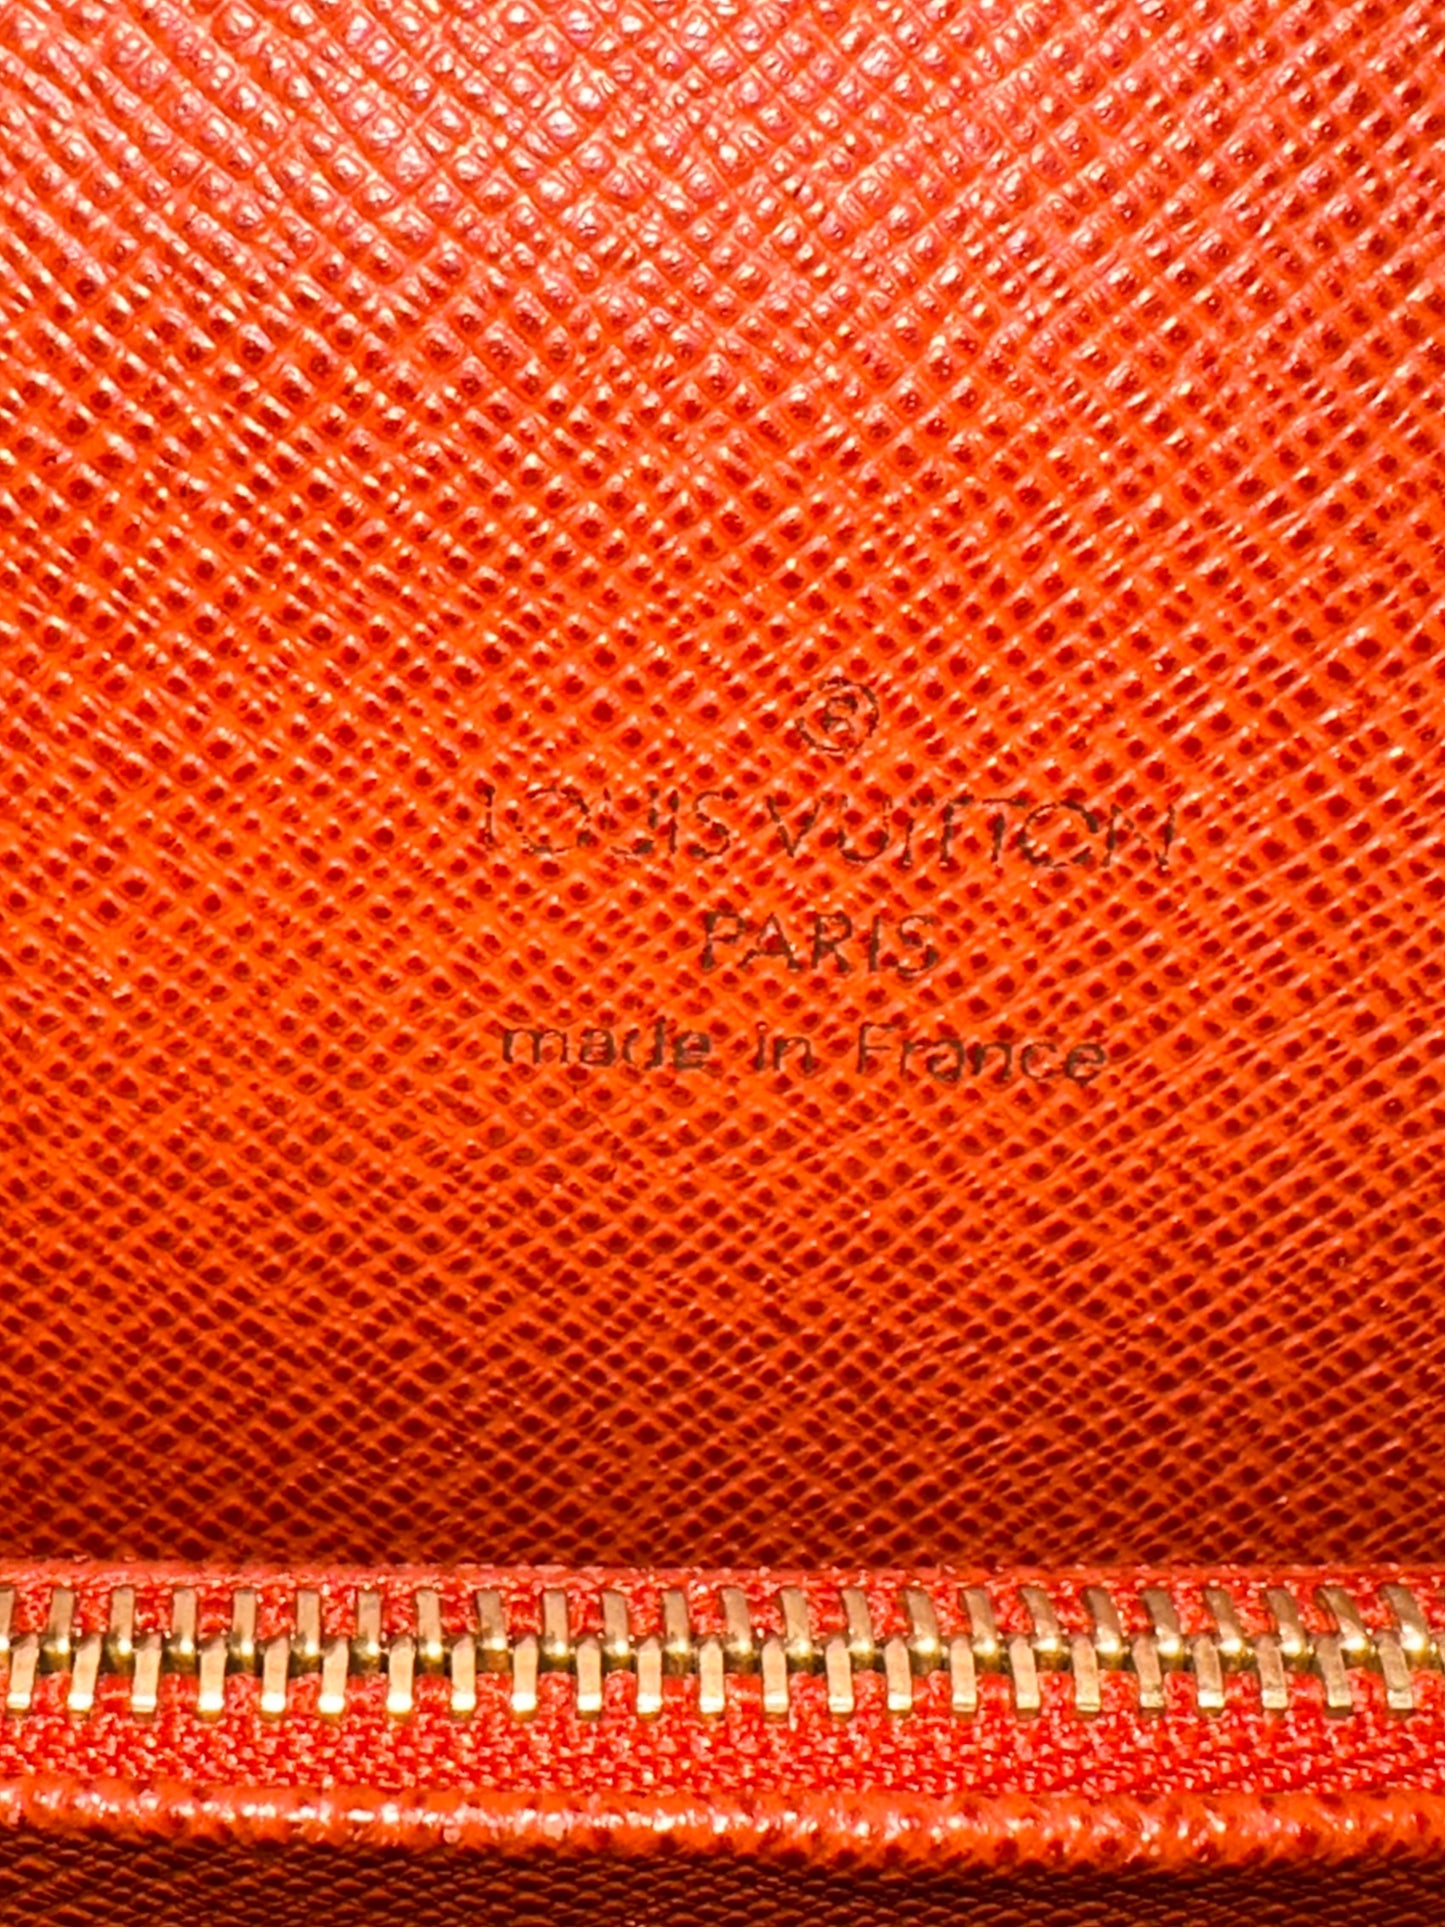 Pre-owned Louis Vuitton Tribeca Damier Ebene Shoulder Bag / Handbag